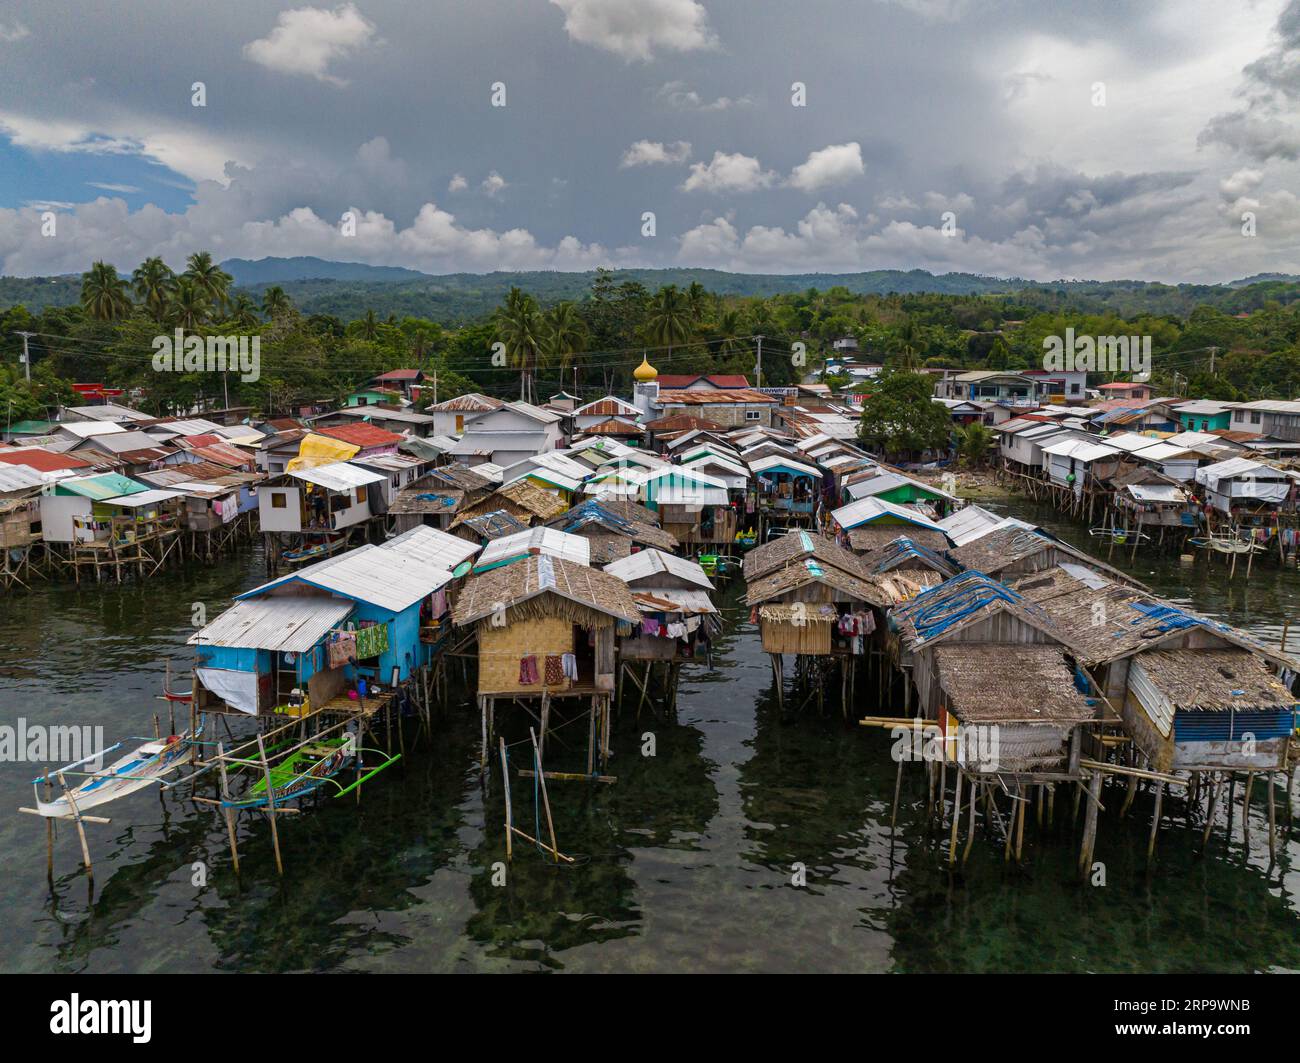 Villages of stilt houses in Zamboanga coastal. Mindanao, Philippines. Stock Photo